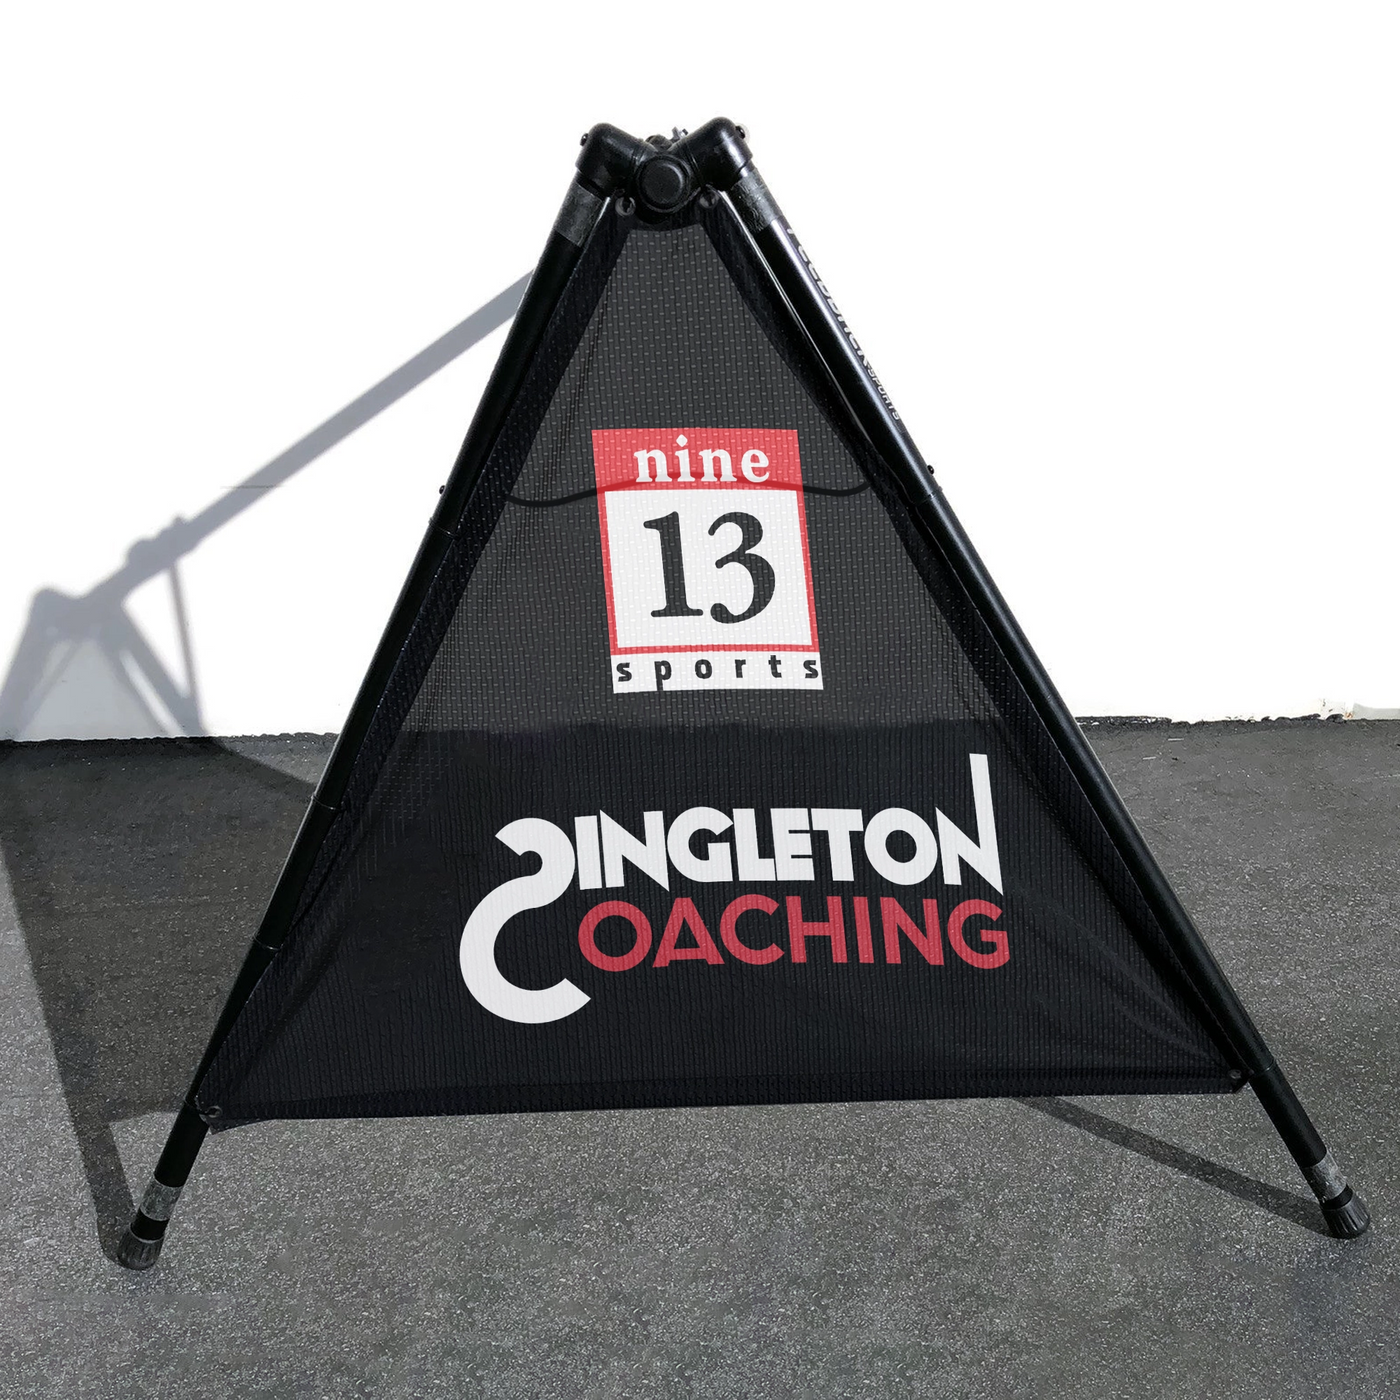 Singleton Coaching Nine13 2023 Bike Rack Banners (Set of 2 Mesh Banners)